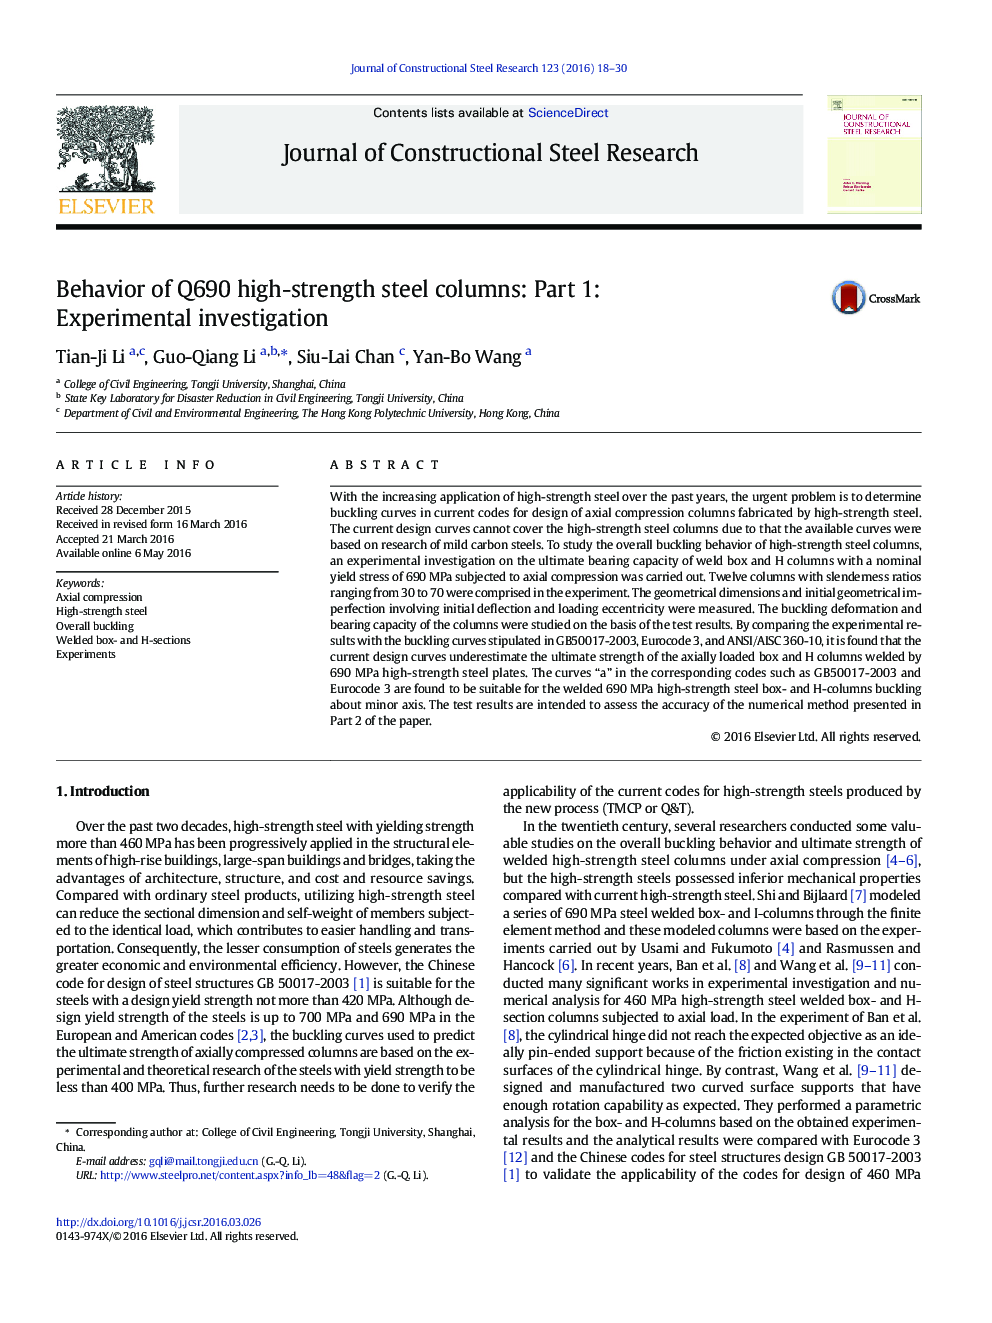 Behavior of Q690 high-strength steel columns: Part 1: Experimental investigation